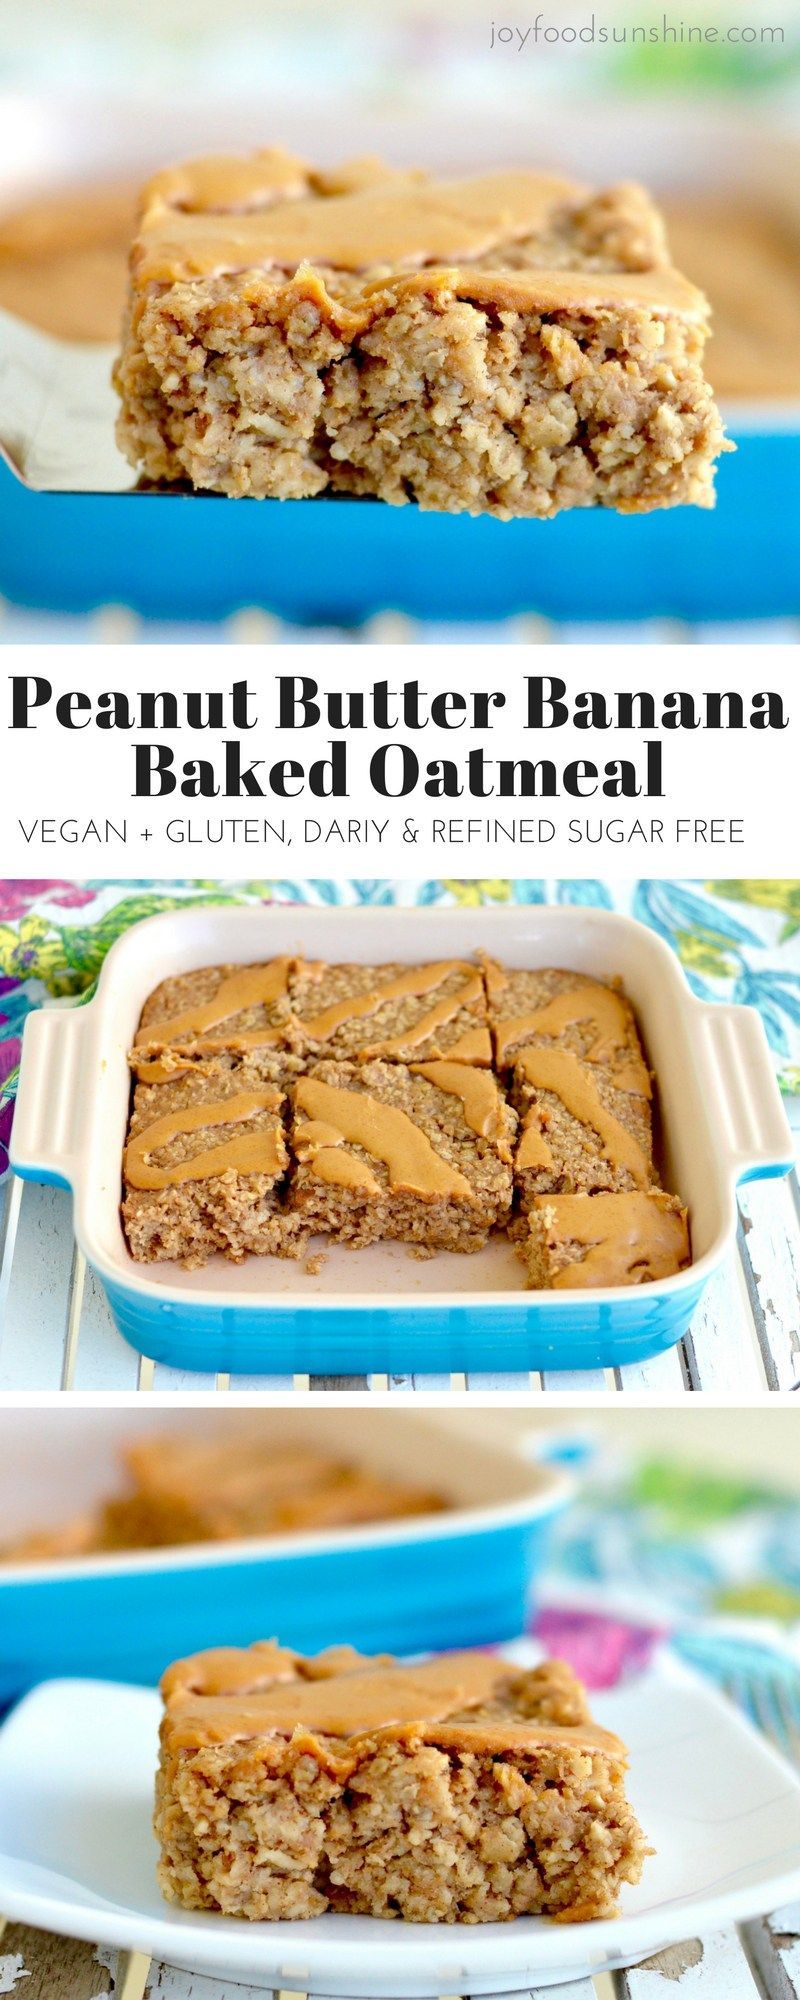 Healthy Peanut Butter Banana Baked Oatmeal Recipe! The perfect make-ahead breakfast! Gluten-free, dairy-free, & vegan-friendly